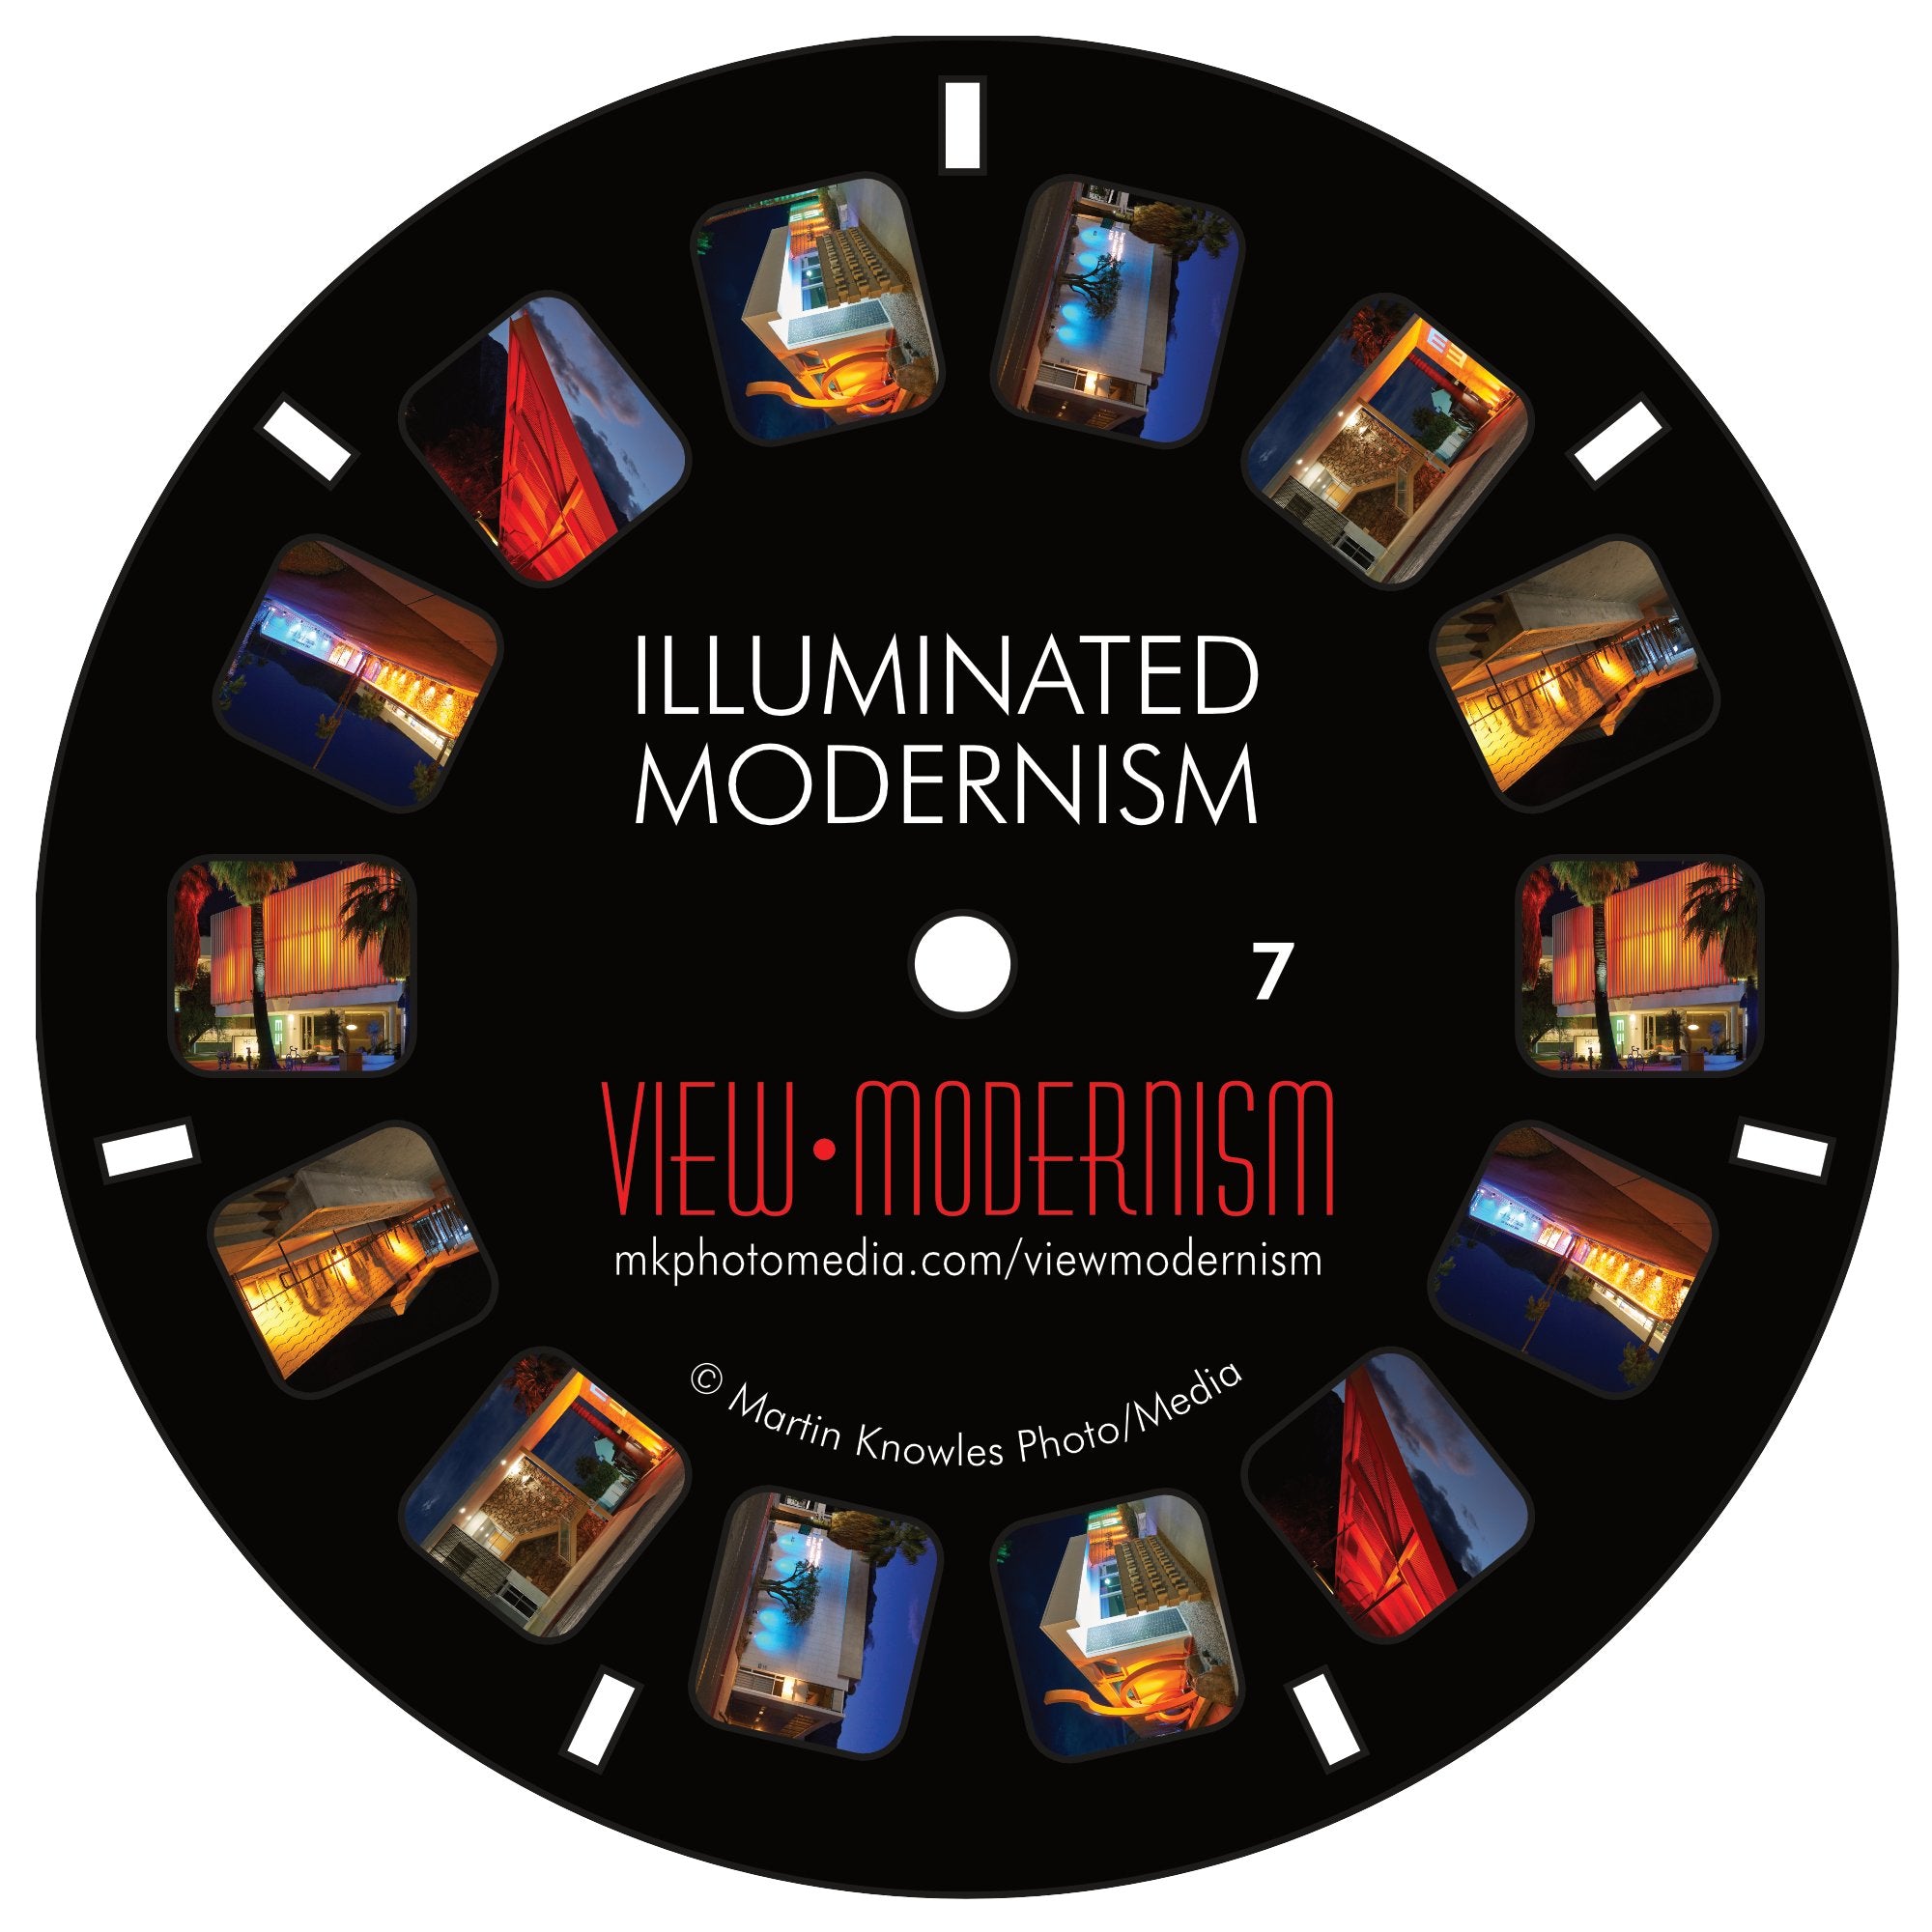 View Modernism Stereoscopic Reel - Illuminated Modern - Destination PSP